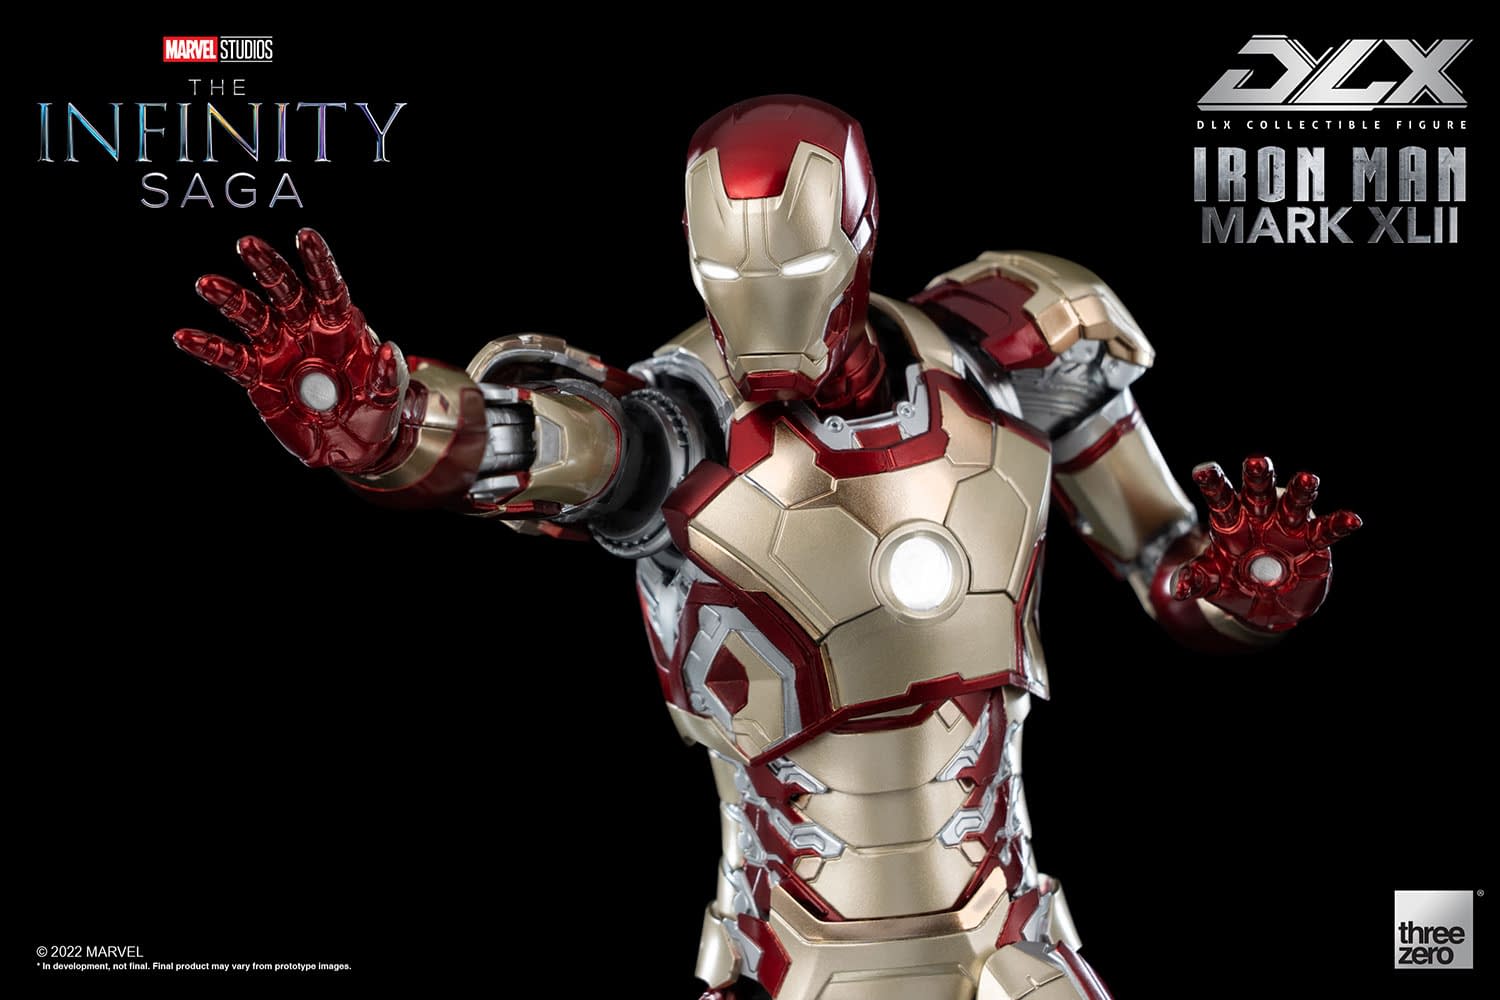 Threezero's Iron Man Hall of Armor Continues with Mark 42 DLX Figure